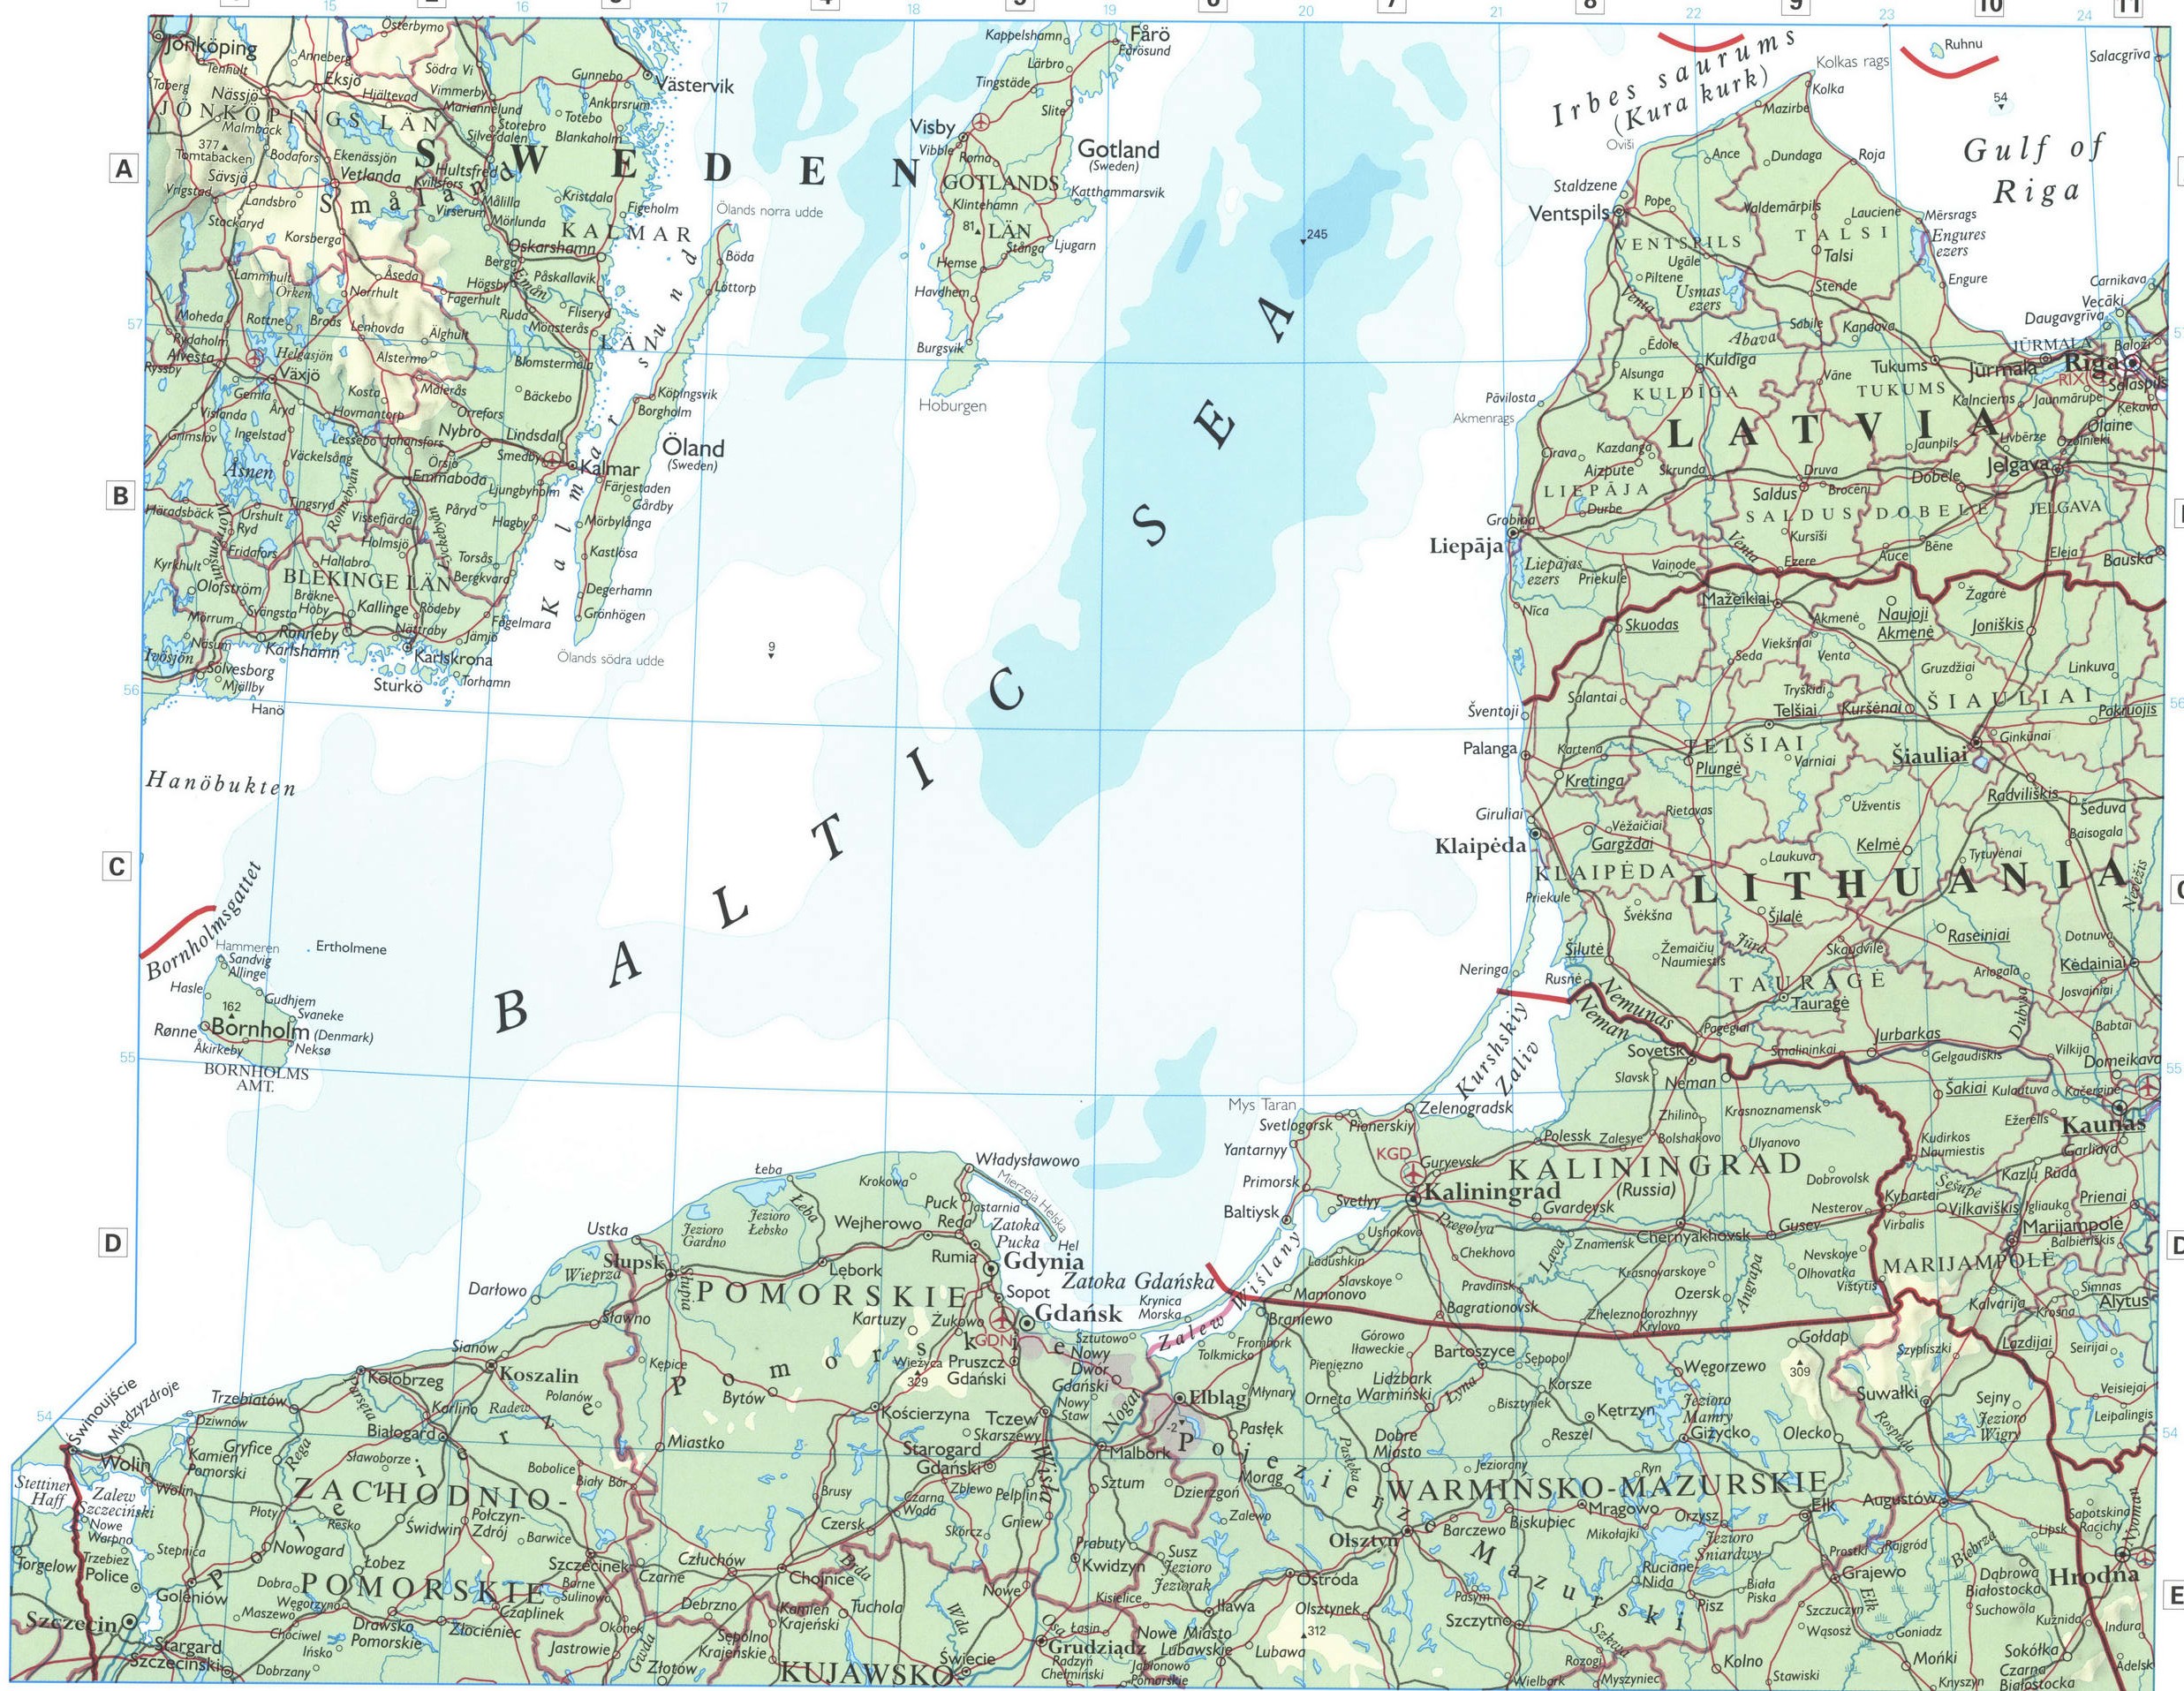 Poland and Baltic sea map